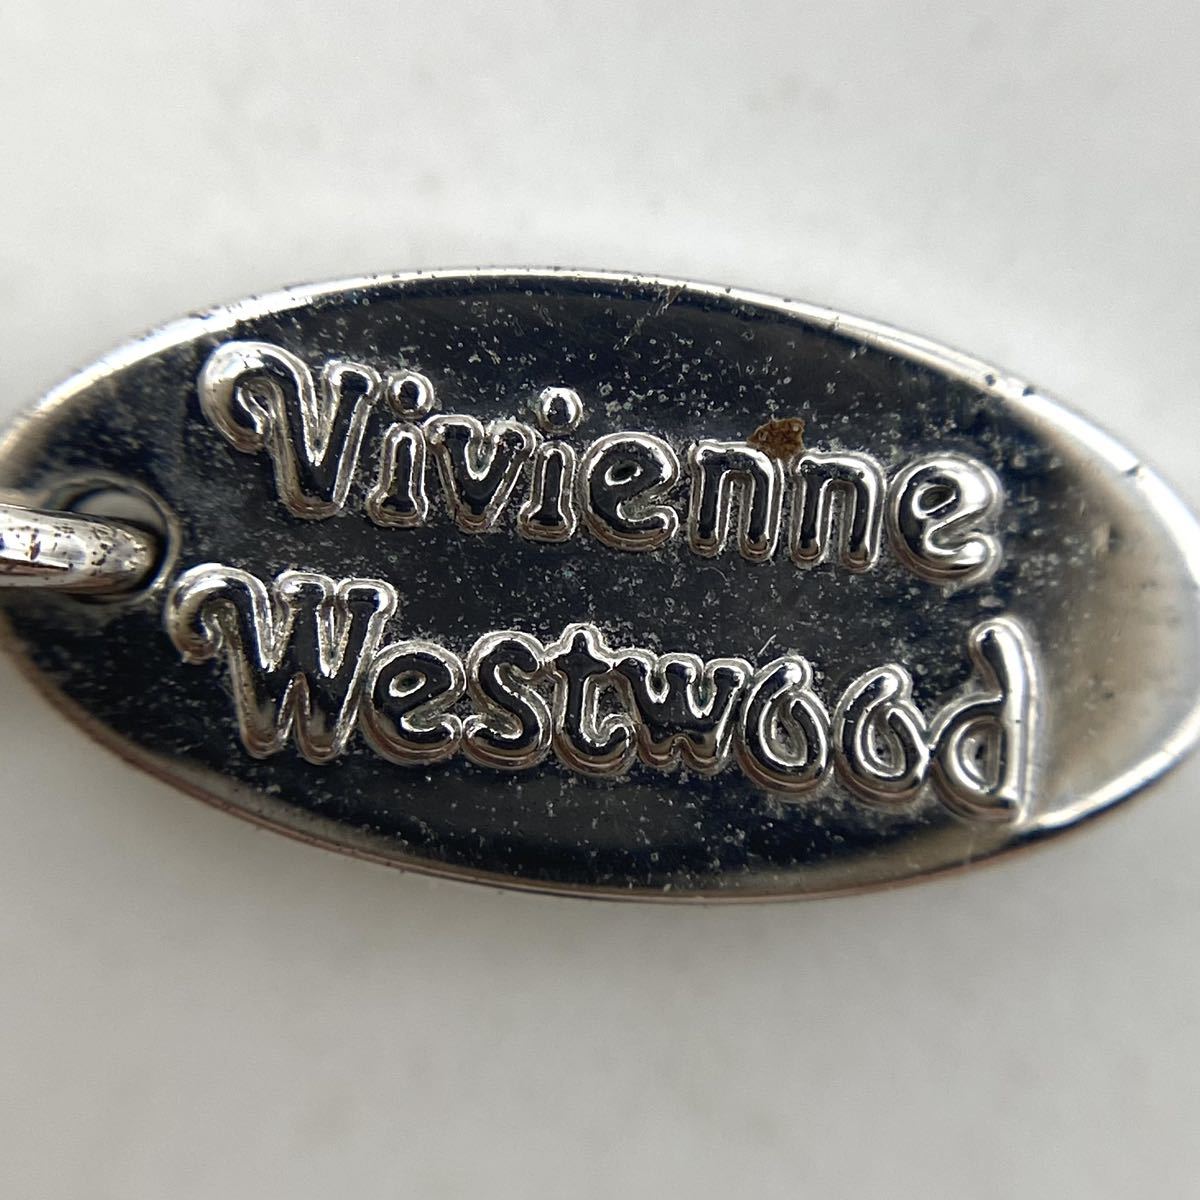 Vivienne Westwood ヴィヴィアン ウエストウッド ネックレス シルバー×エメラルド メイフェアスモールオーブアクセサリー P95_画像5